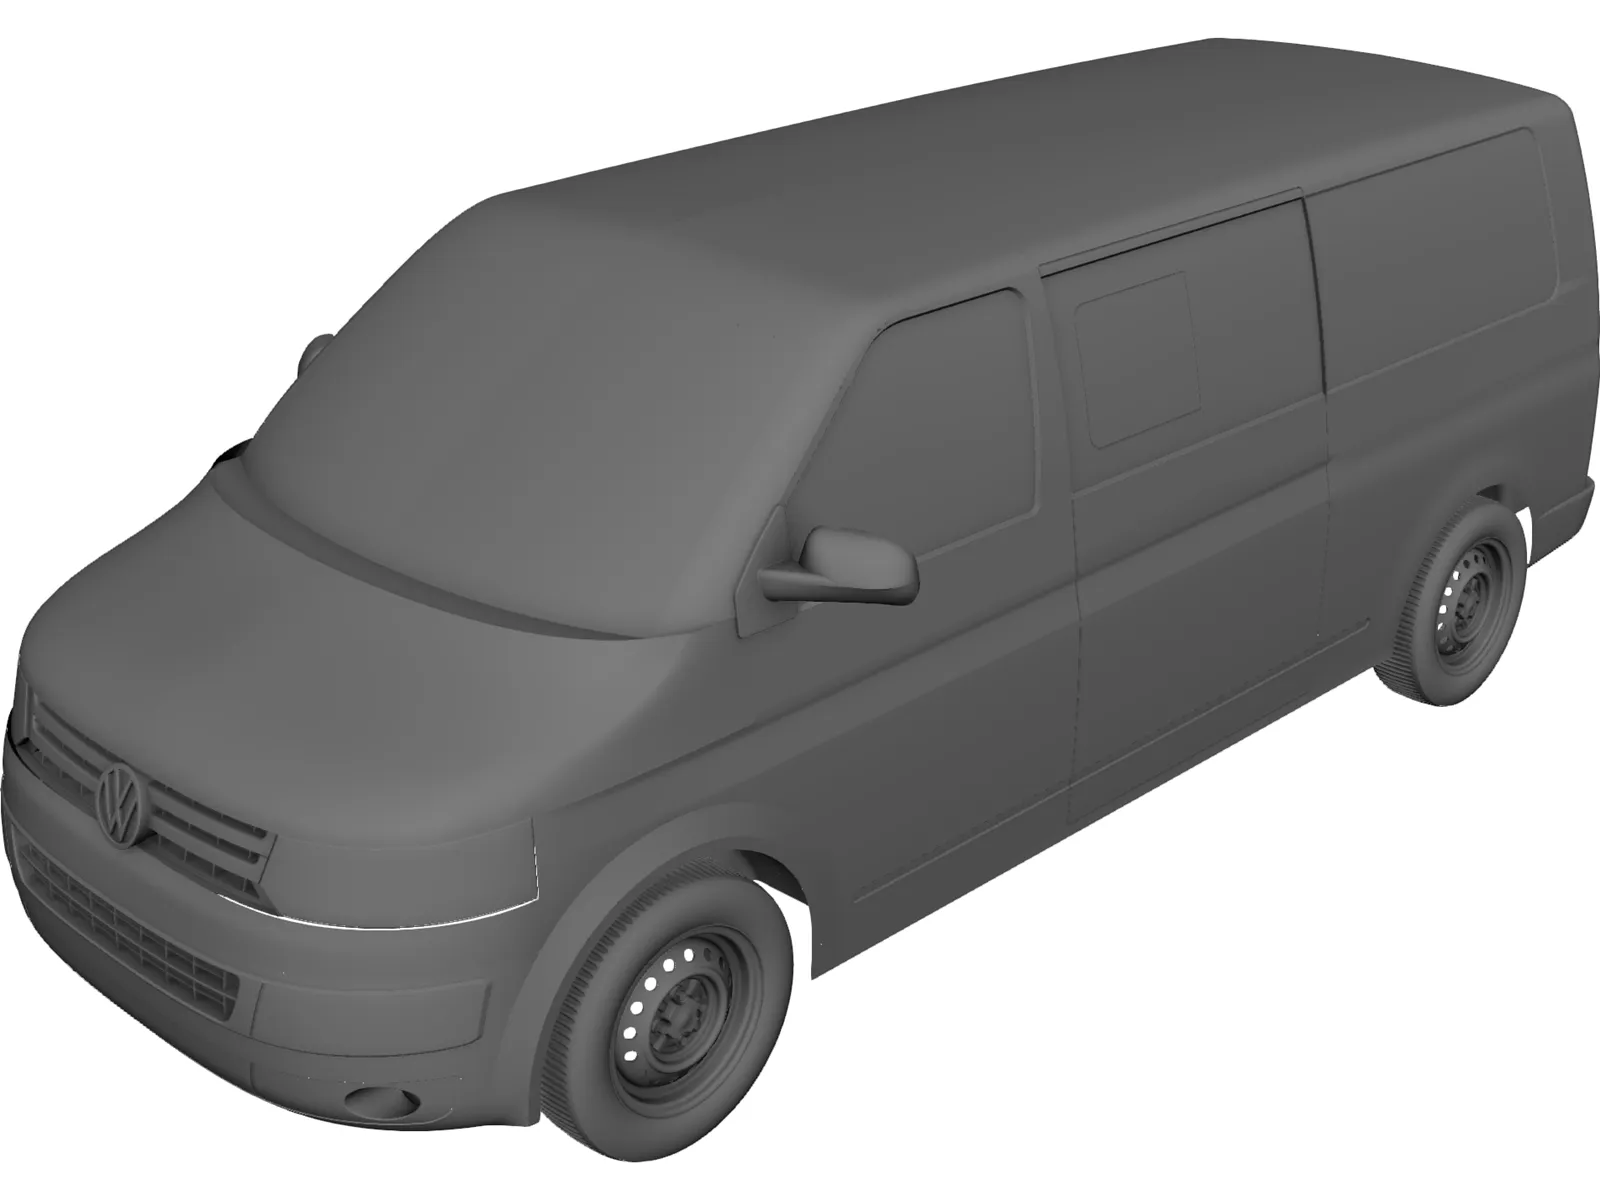 Volkswagen Transporter T5 CAD Model - 3DCADBrowser